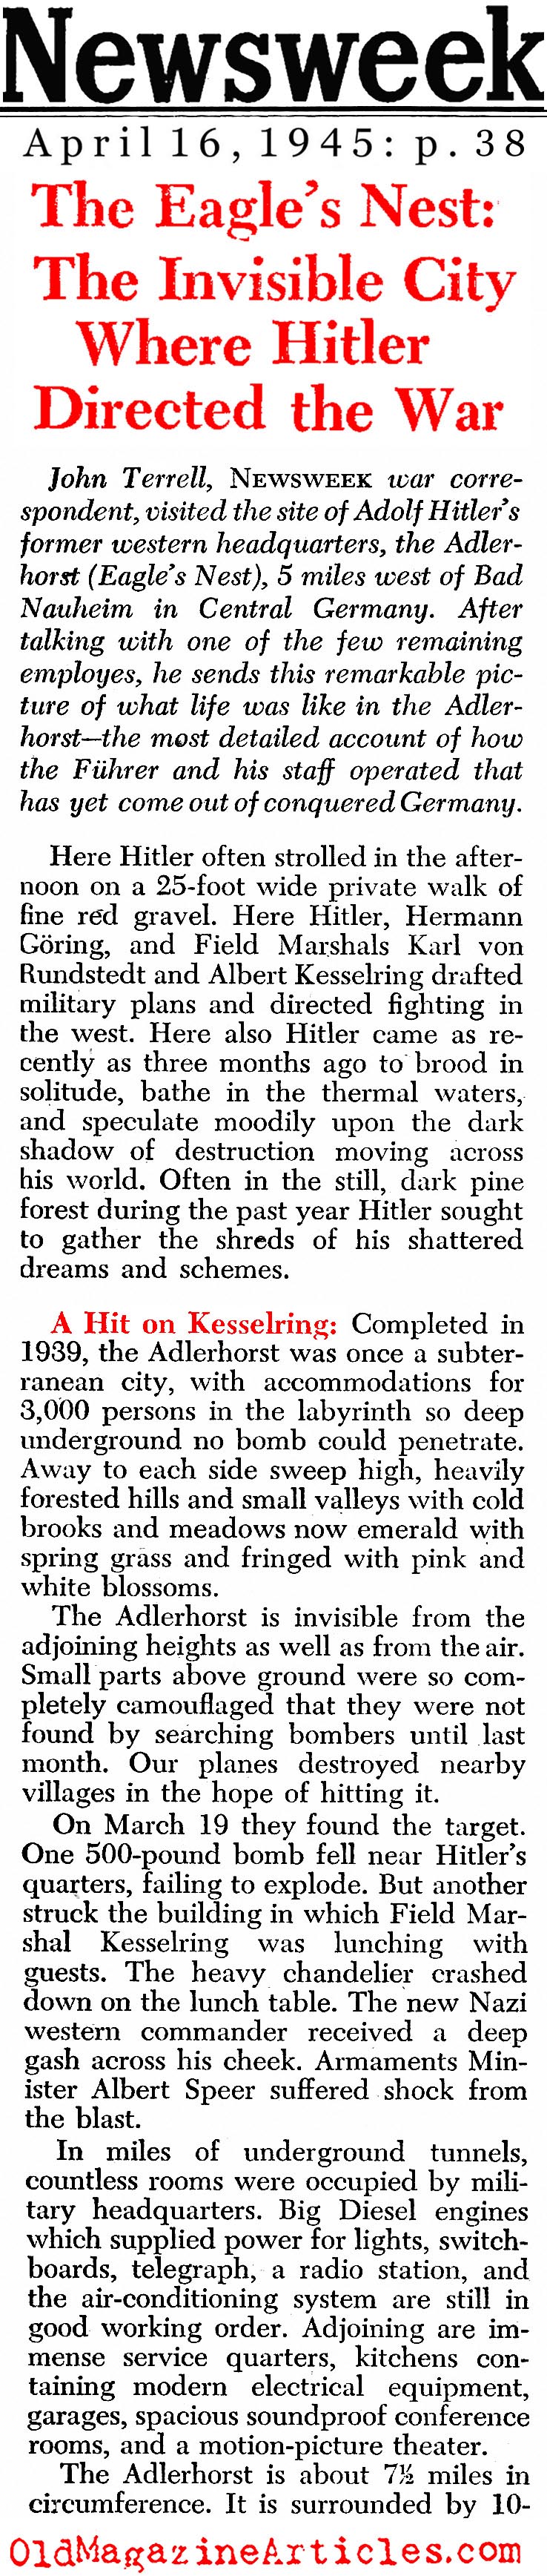 Hitler's Other Address (Newsweek Magazine, 1945)